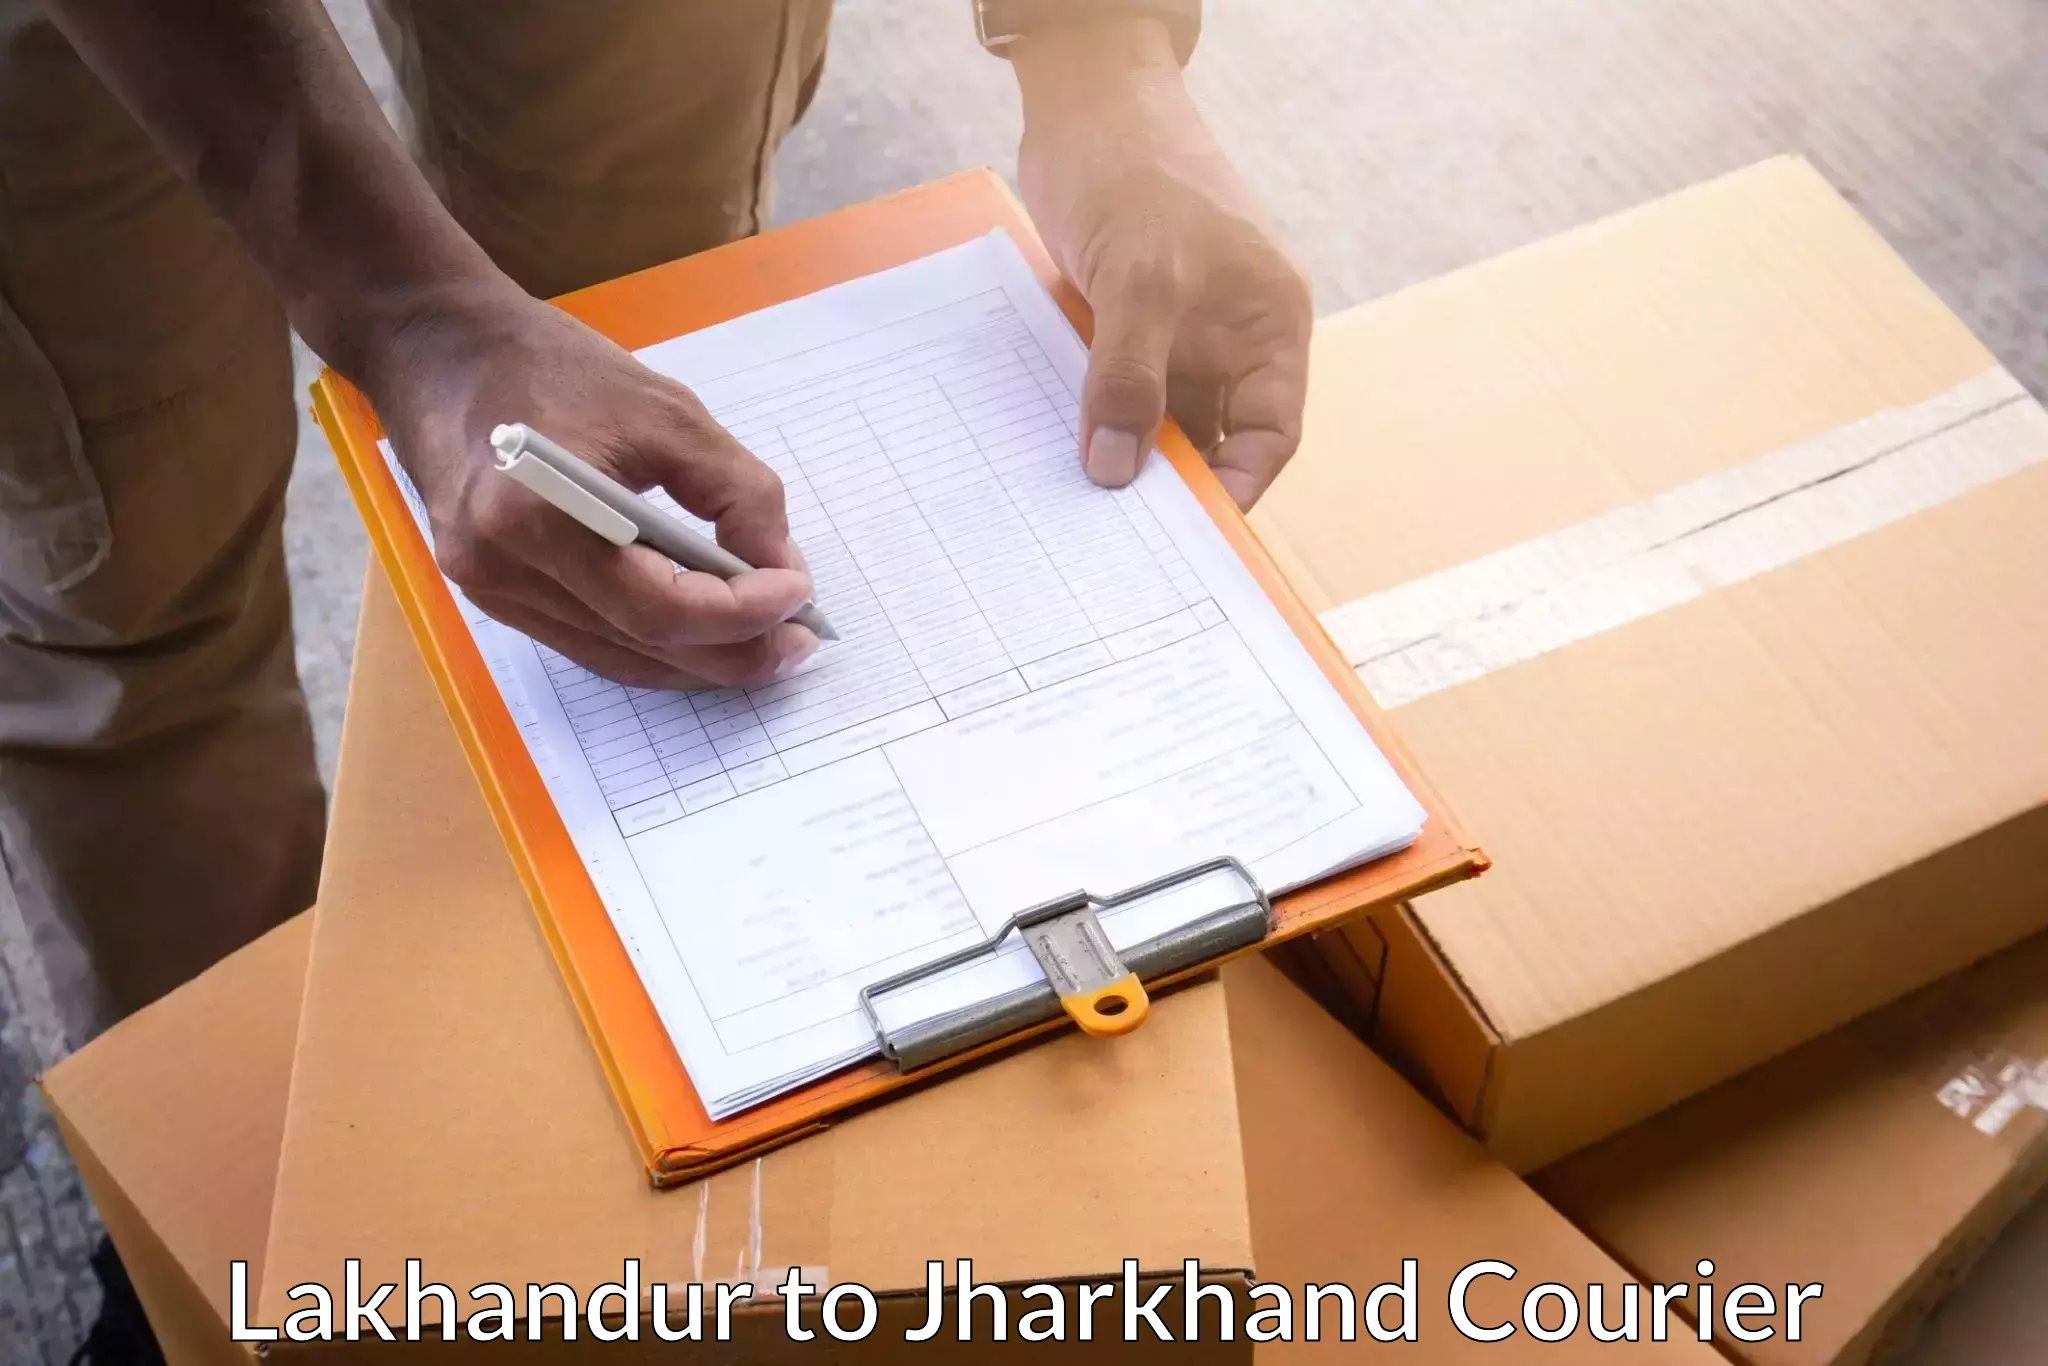 Express package handling Lakhandur to Chandwa